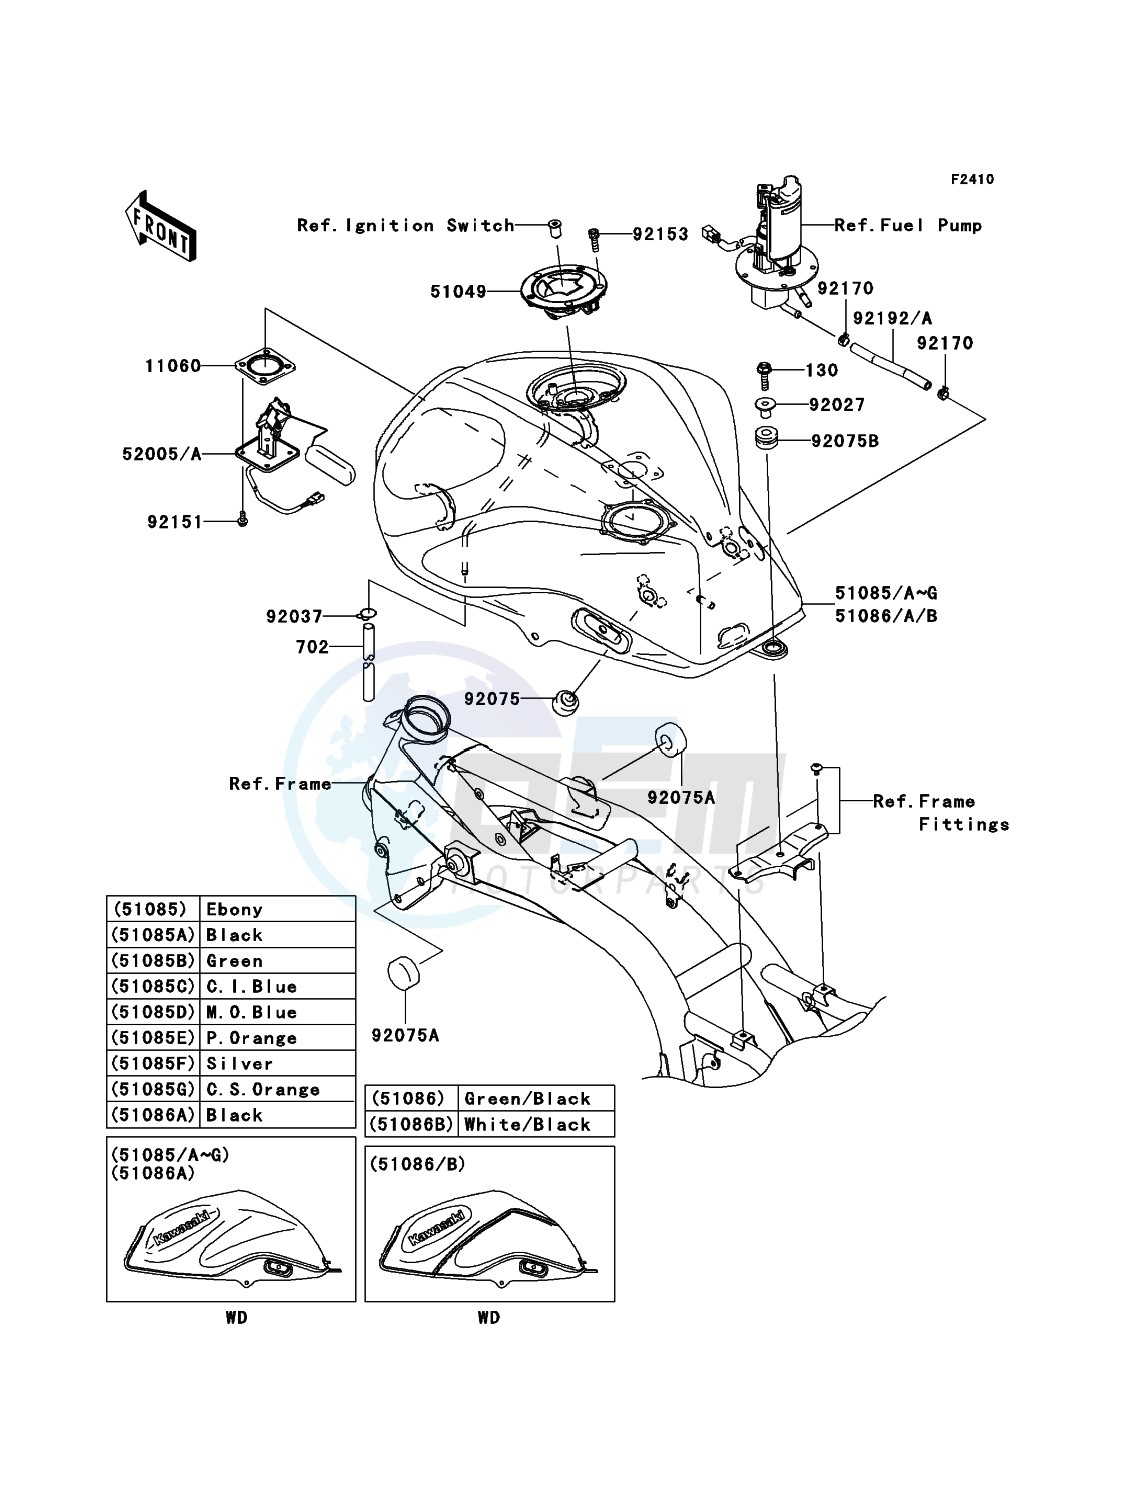 Fuel Tank blueprint